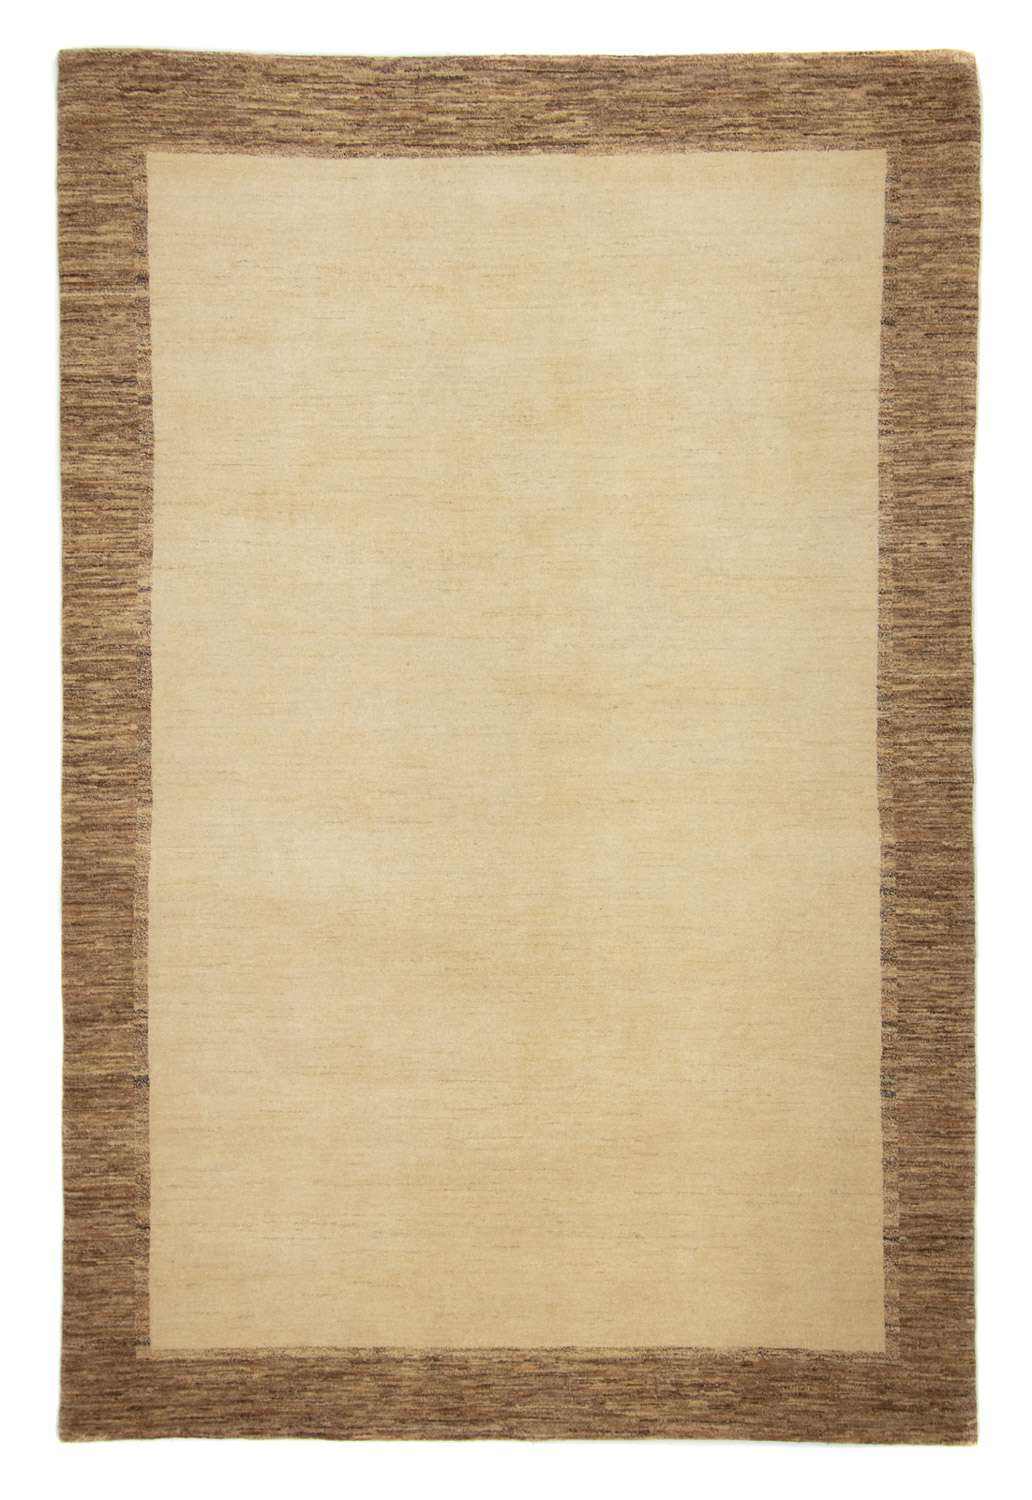 Gabbeh tapijt - Indus - 307 x 200 cm - beige